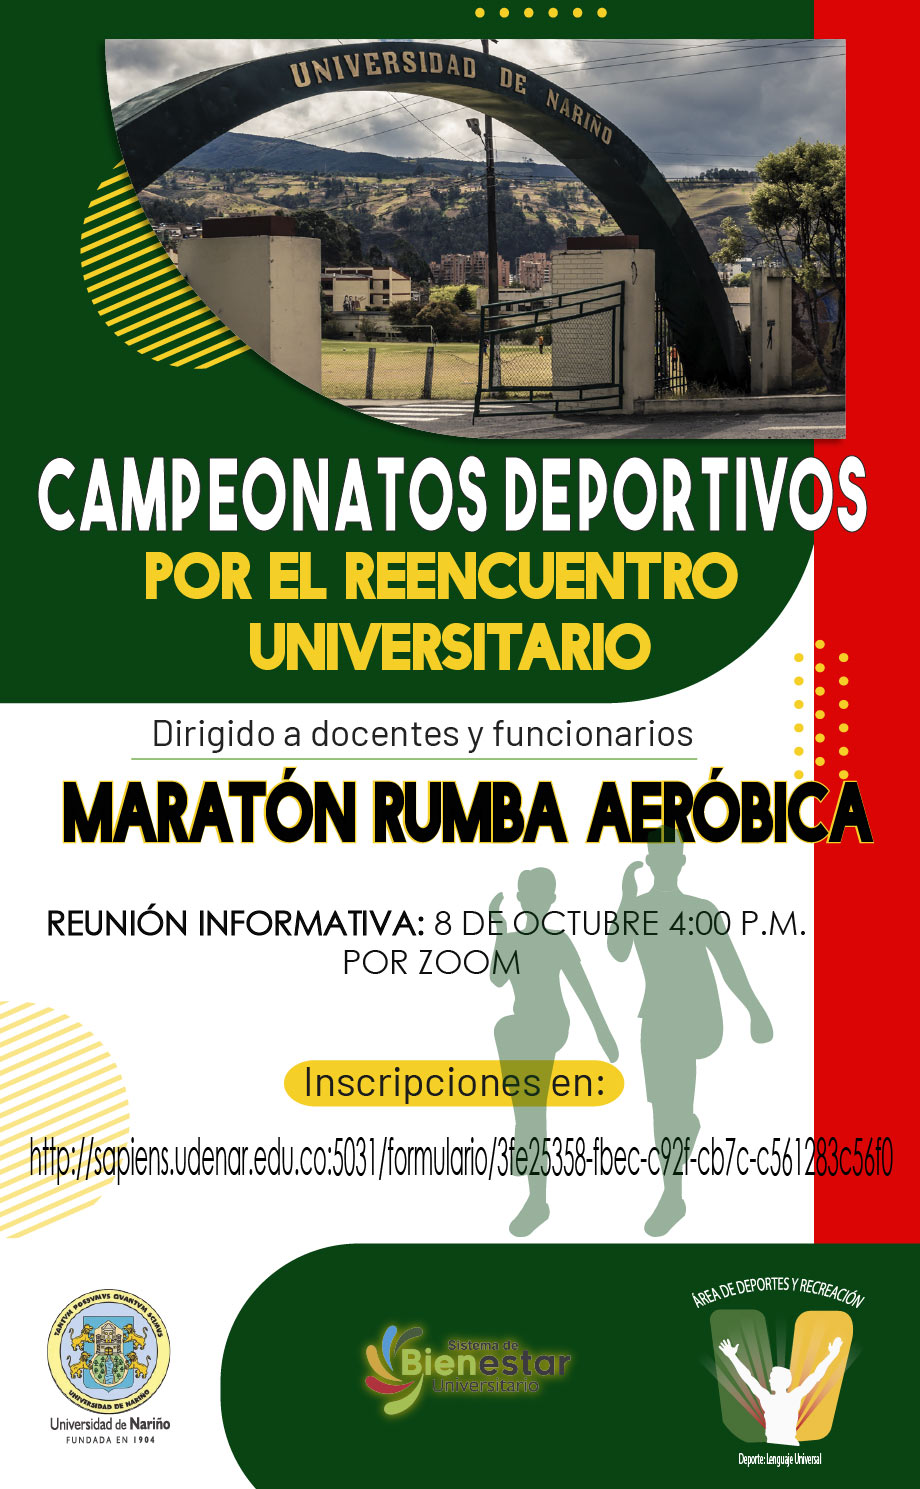 Reencuentro-Universitario-Maraton